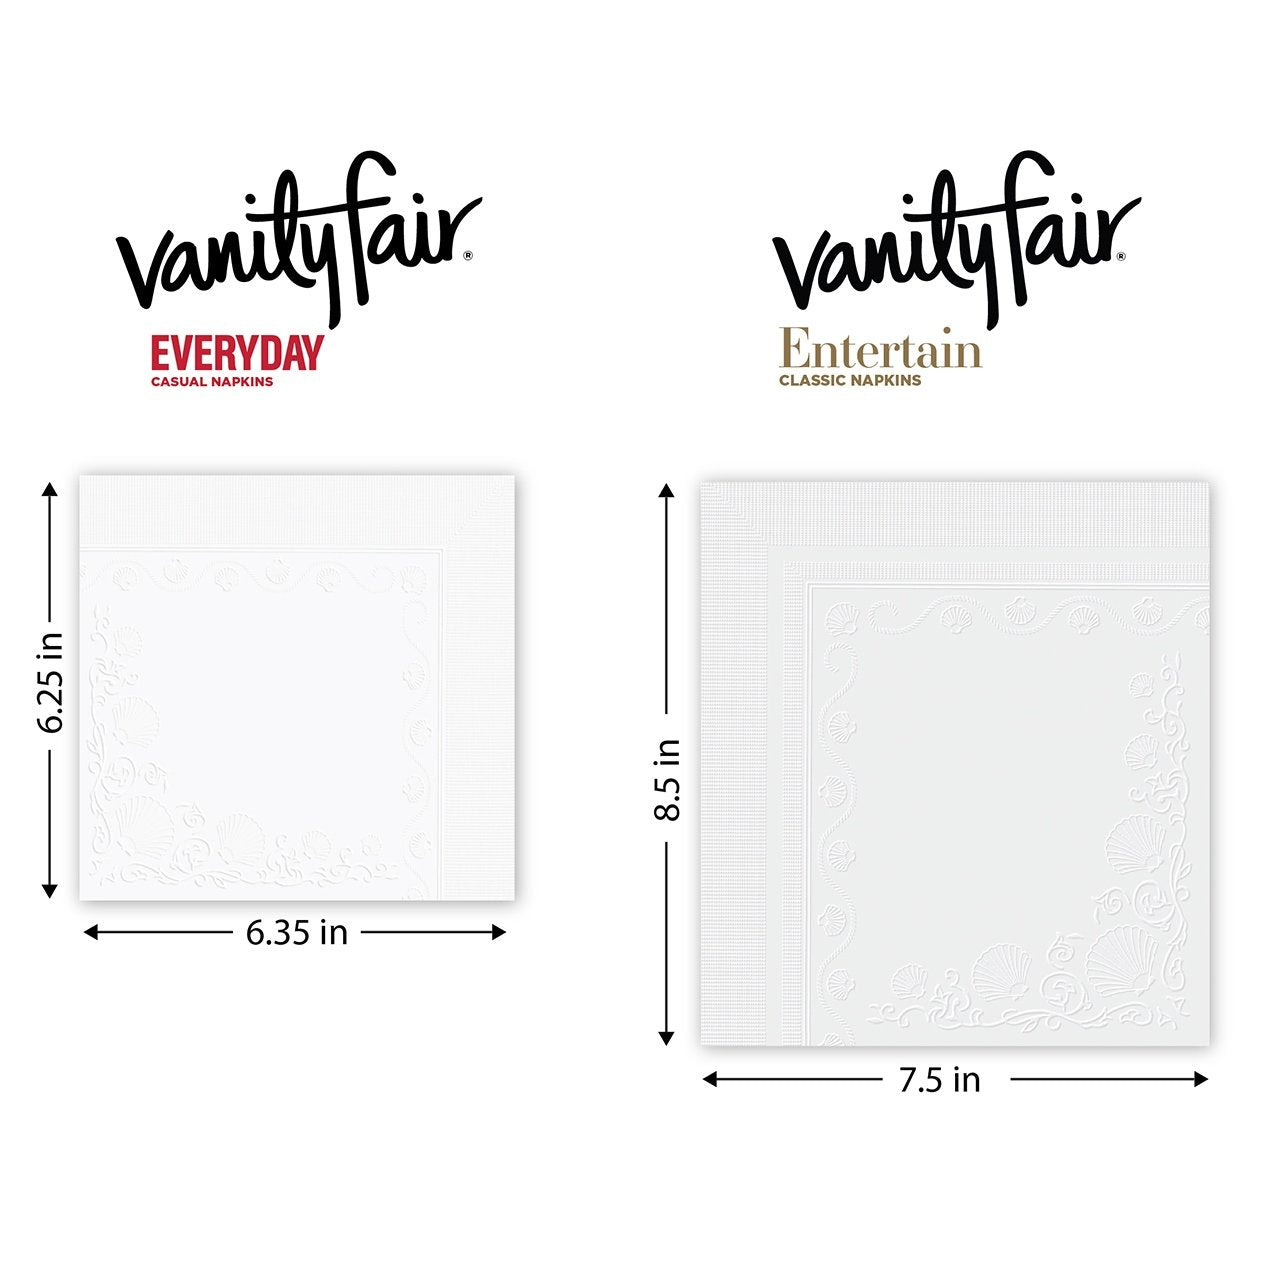 Vanity Fair Everyday Napkins, 660 Count, White Paper Napkins